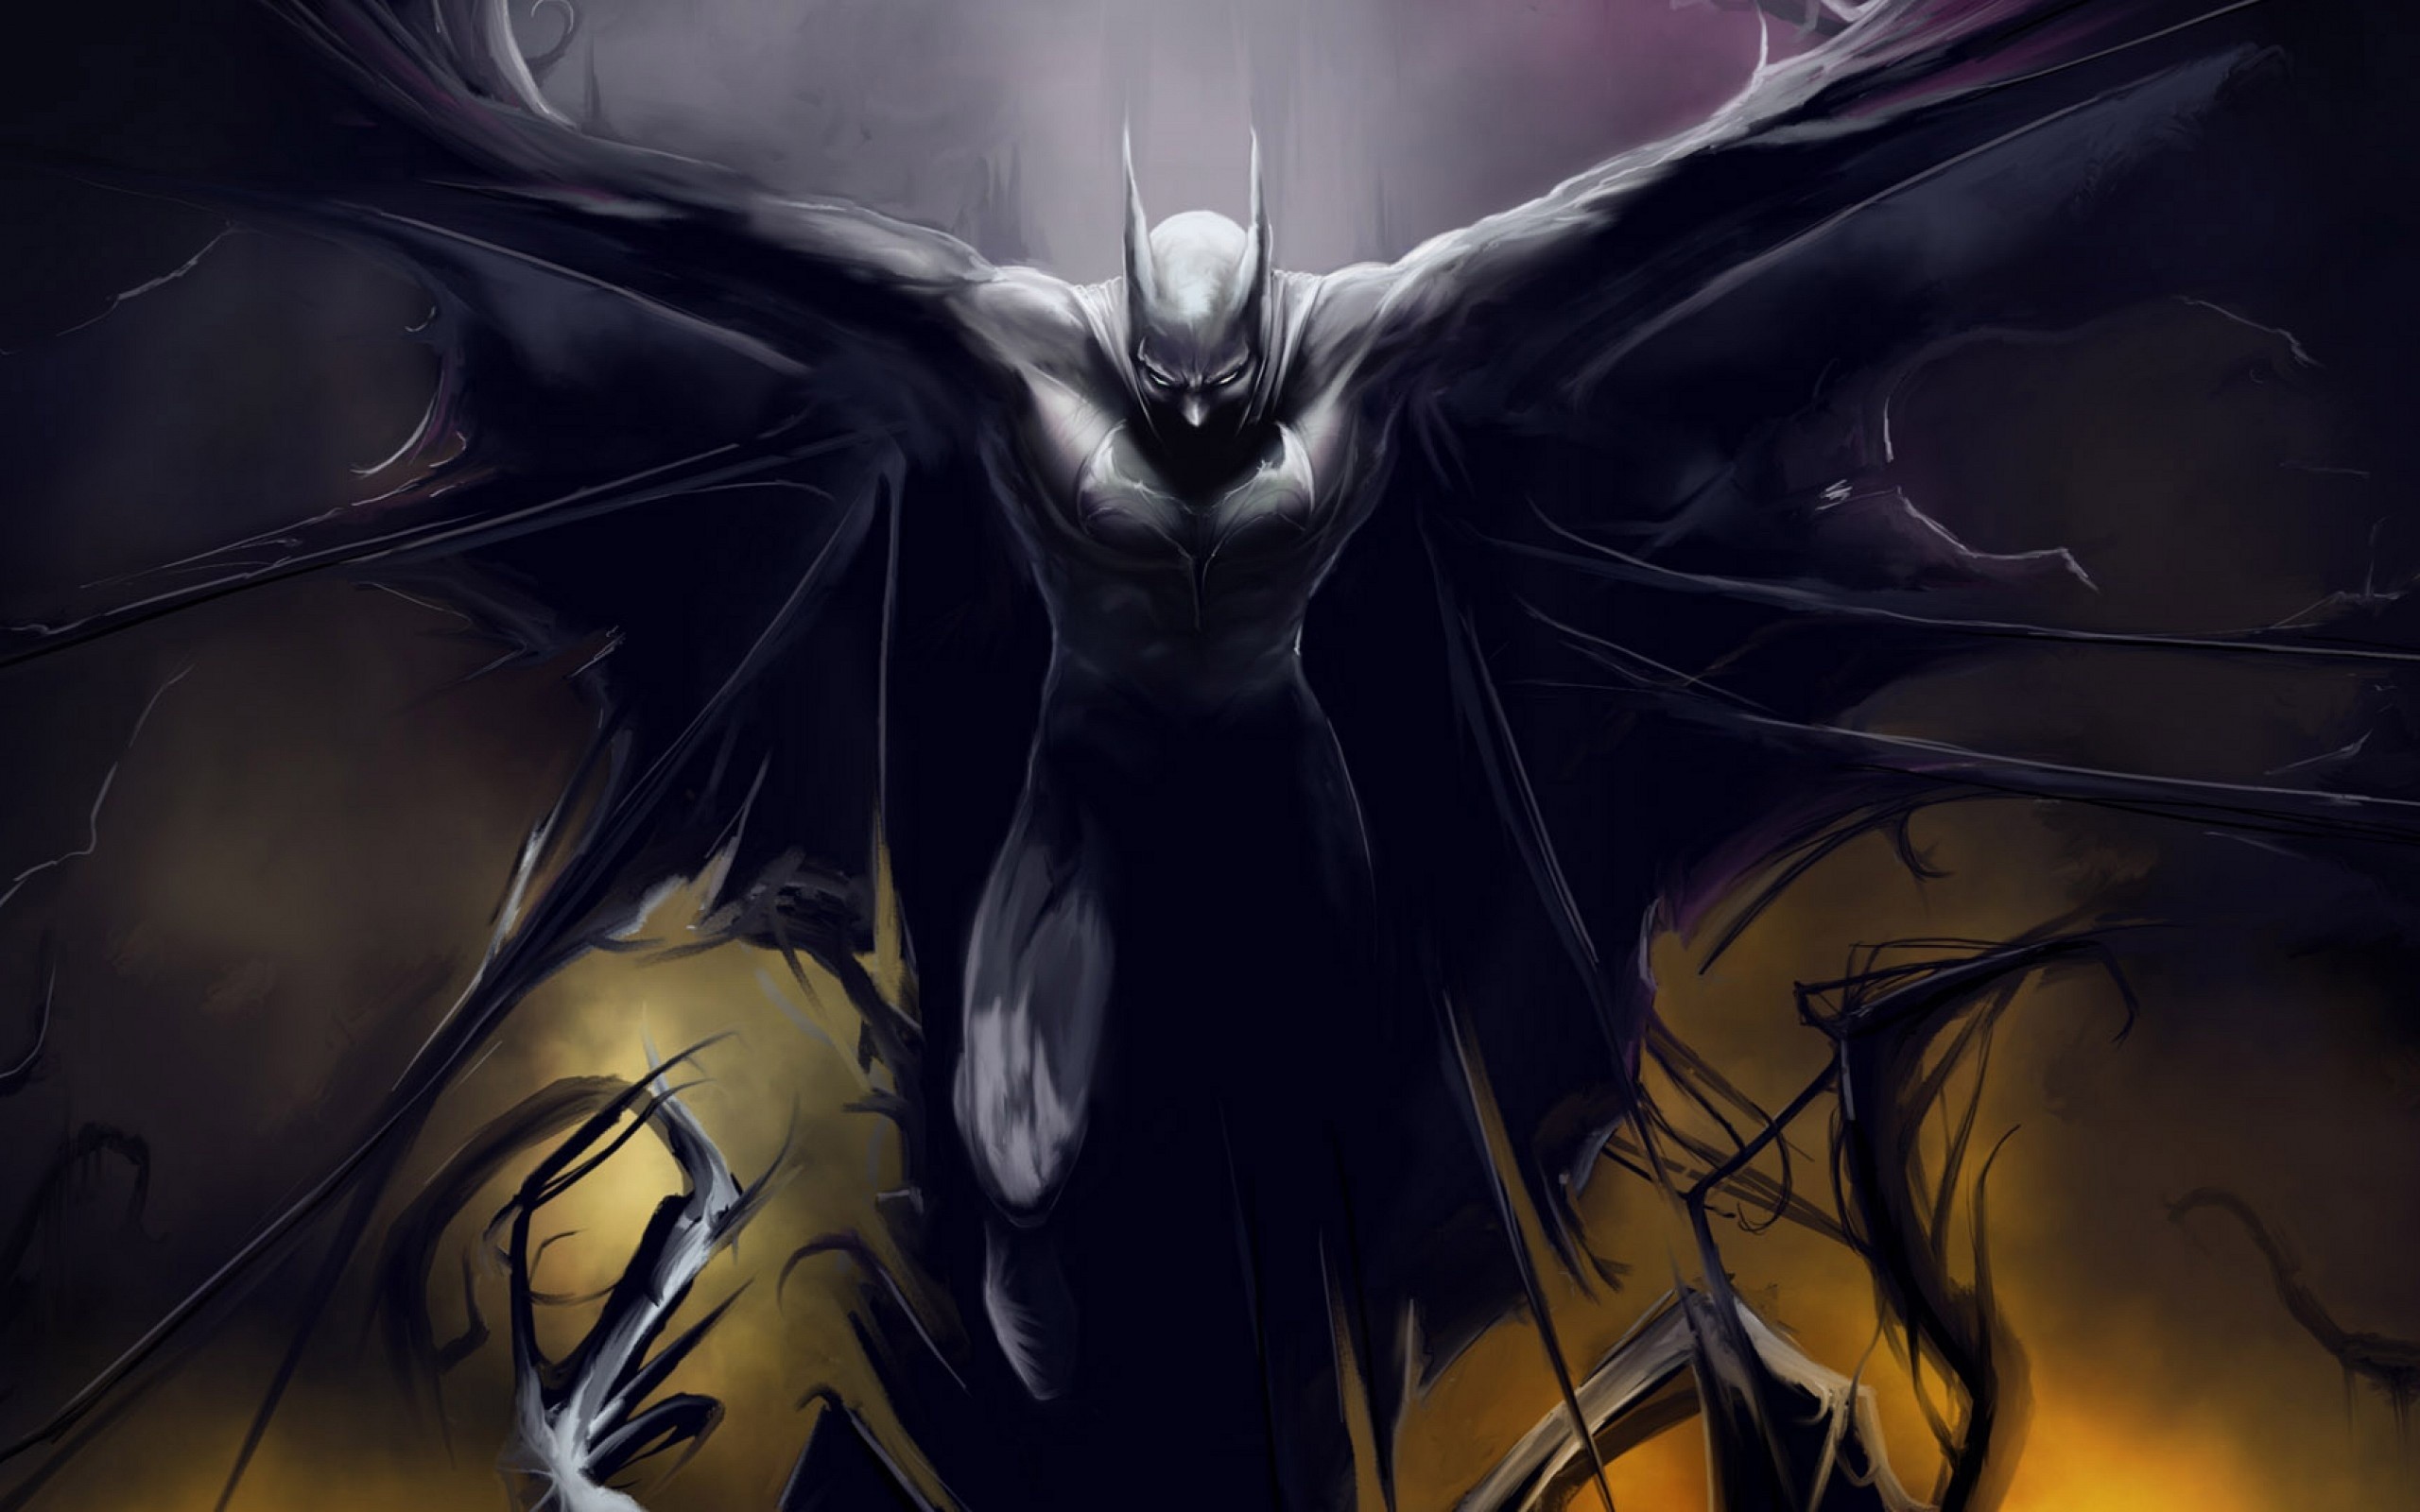  Batman HQ Background Wallpapers